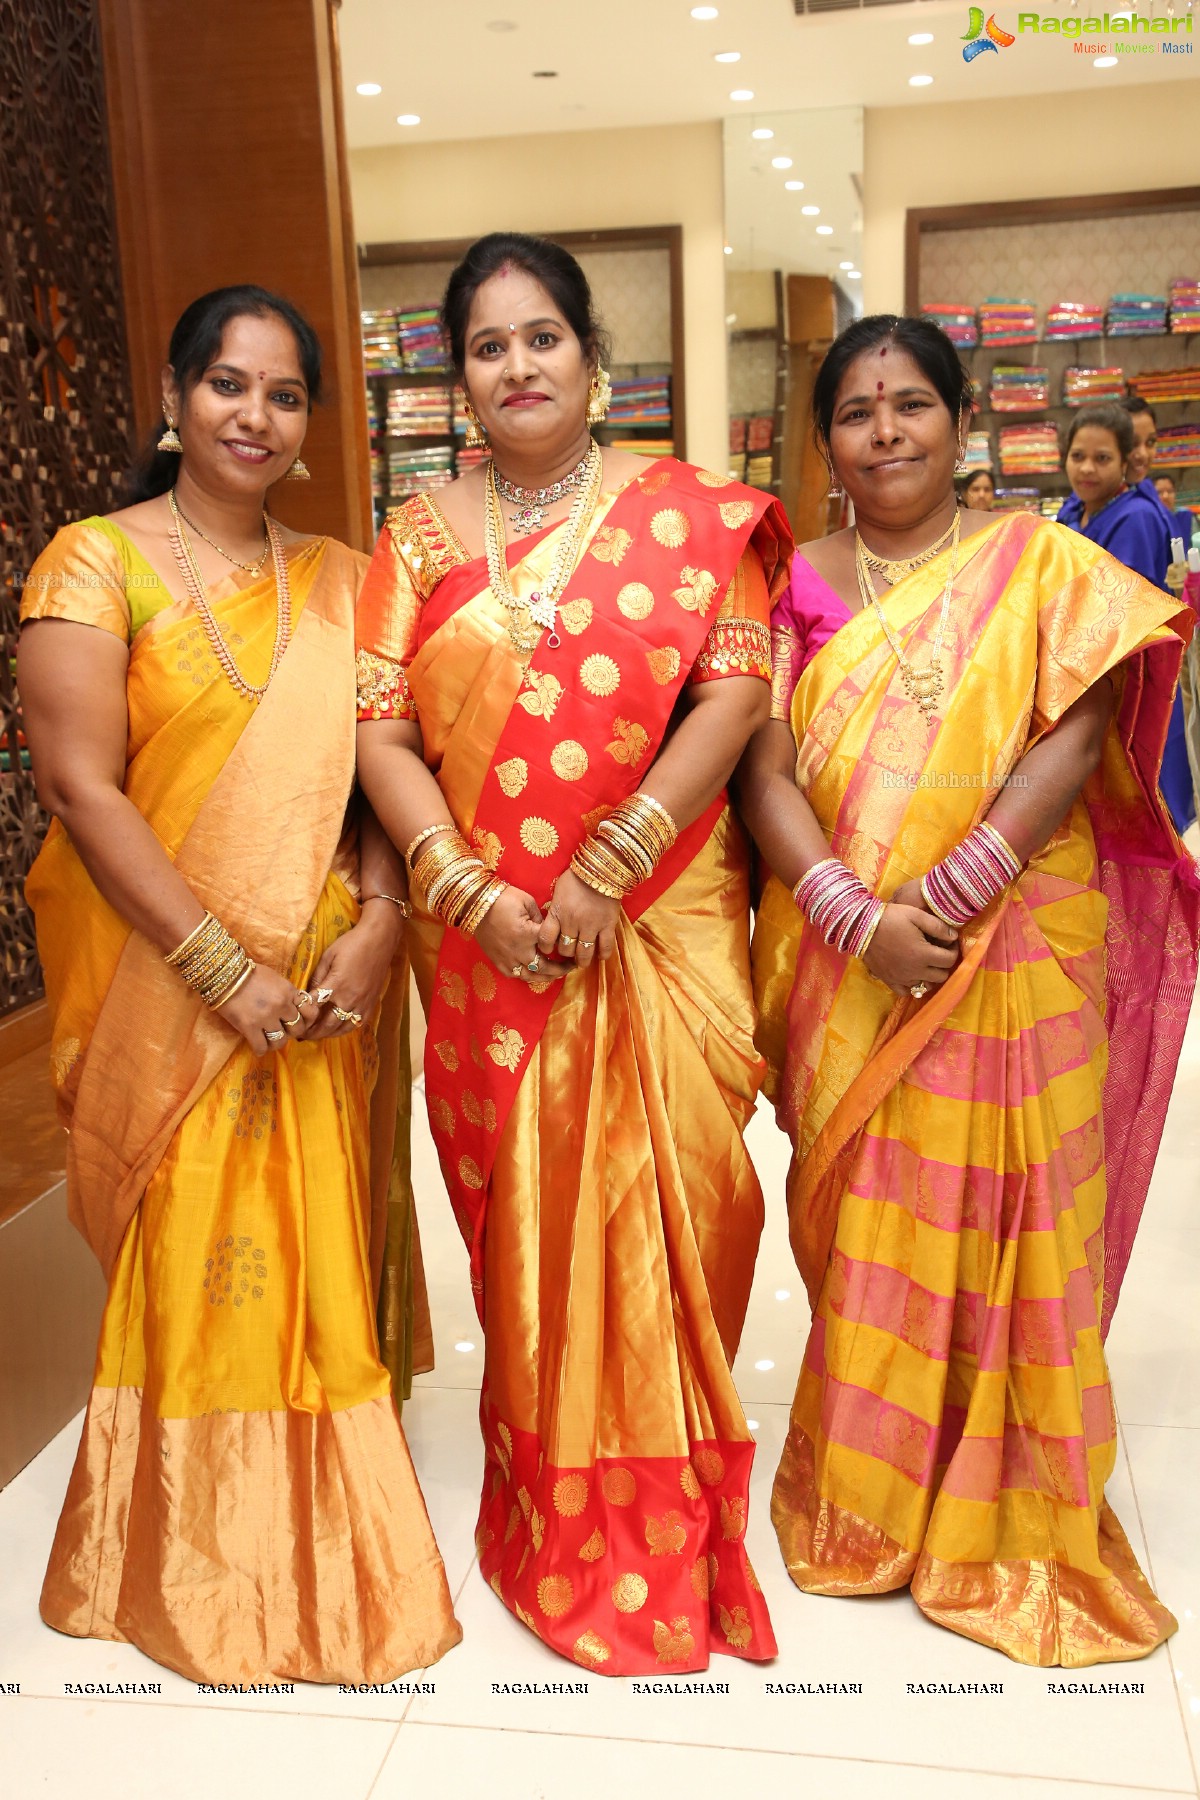 Heroine Pranitha Subhash & Naini Narshimha Reddy Launch Videms Silks @ Vanasthalipuram, Hyderabad